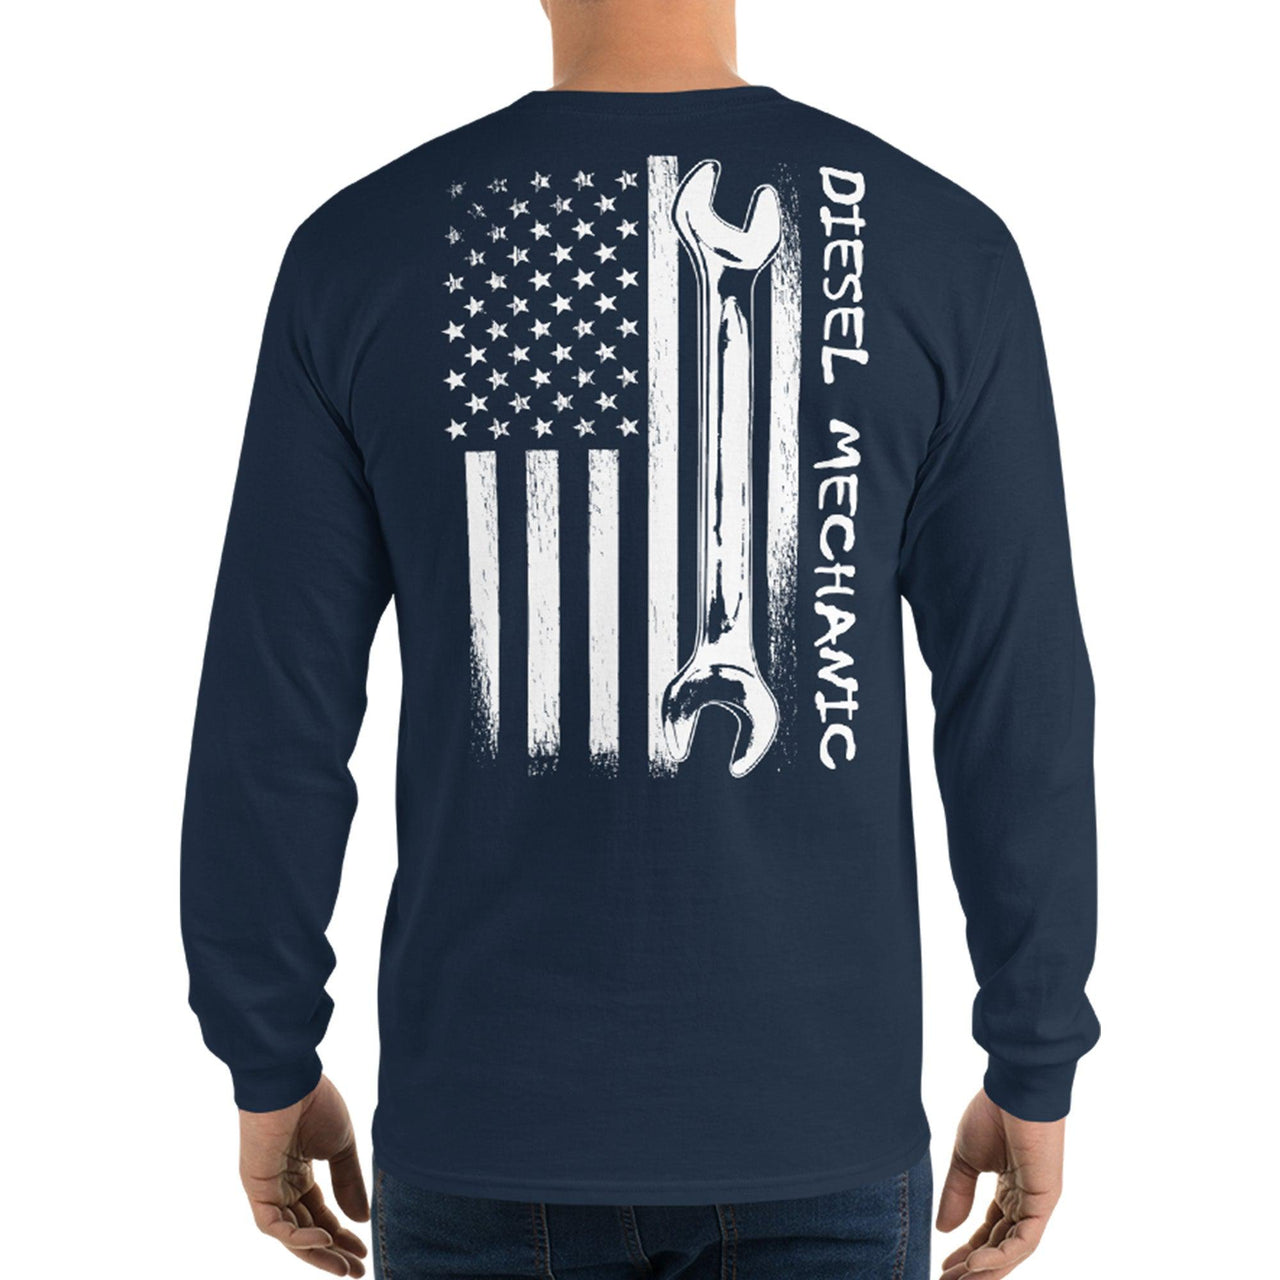 Diesel Mechanic American Flag Long Sleeve T-Shirt modeled in navy back view